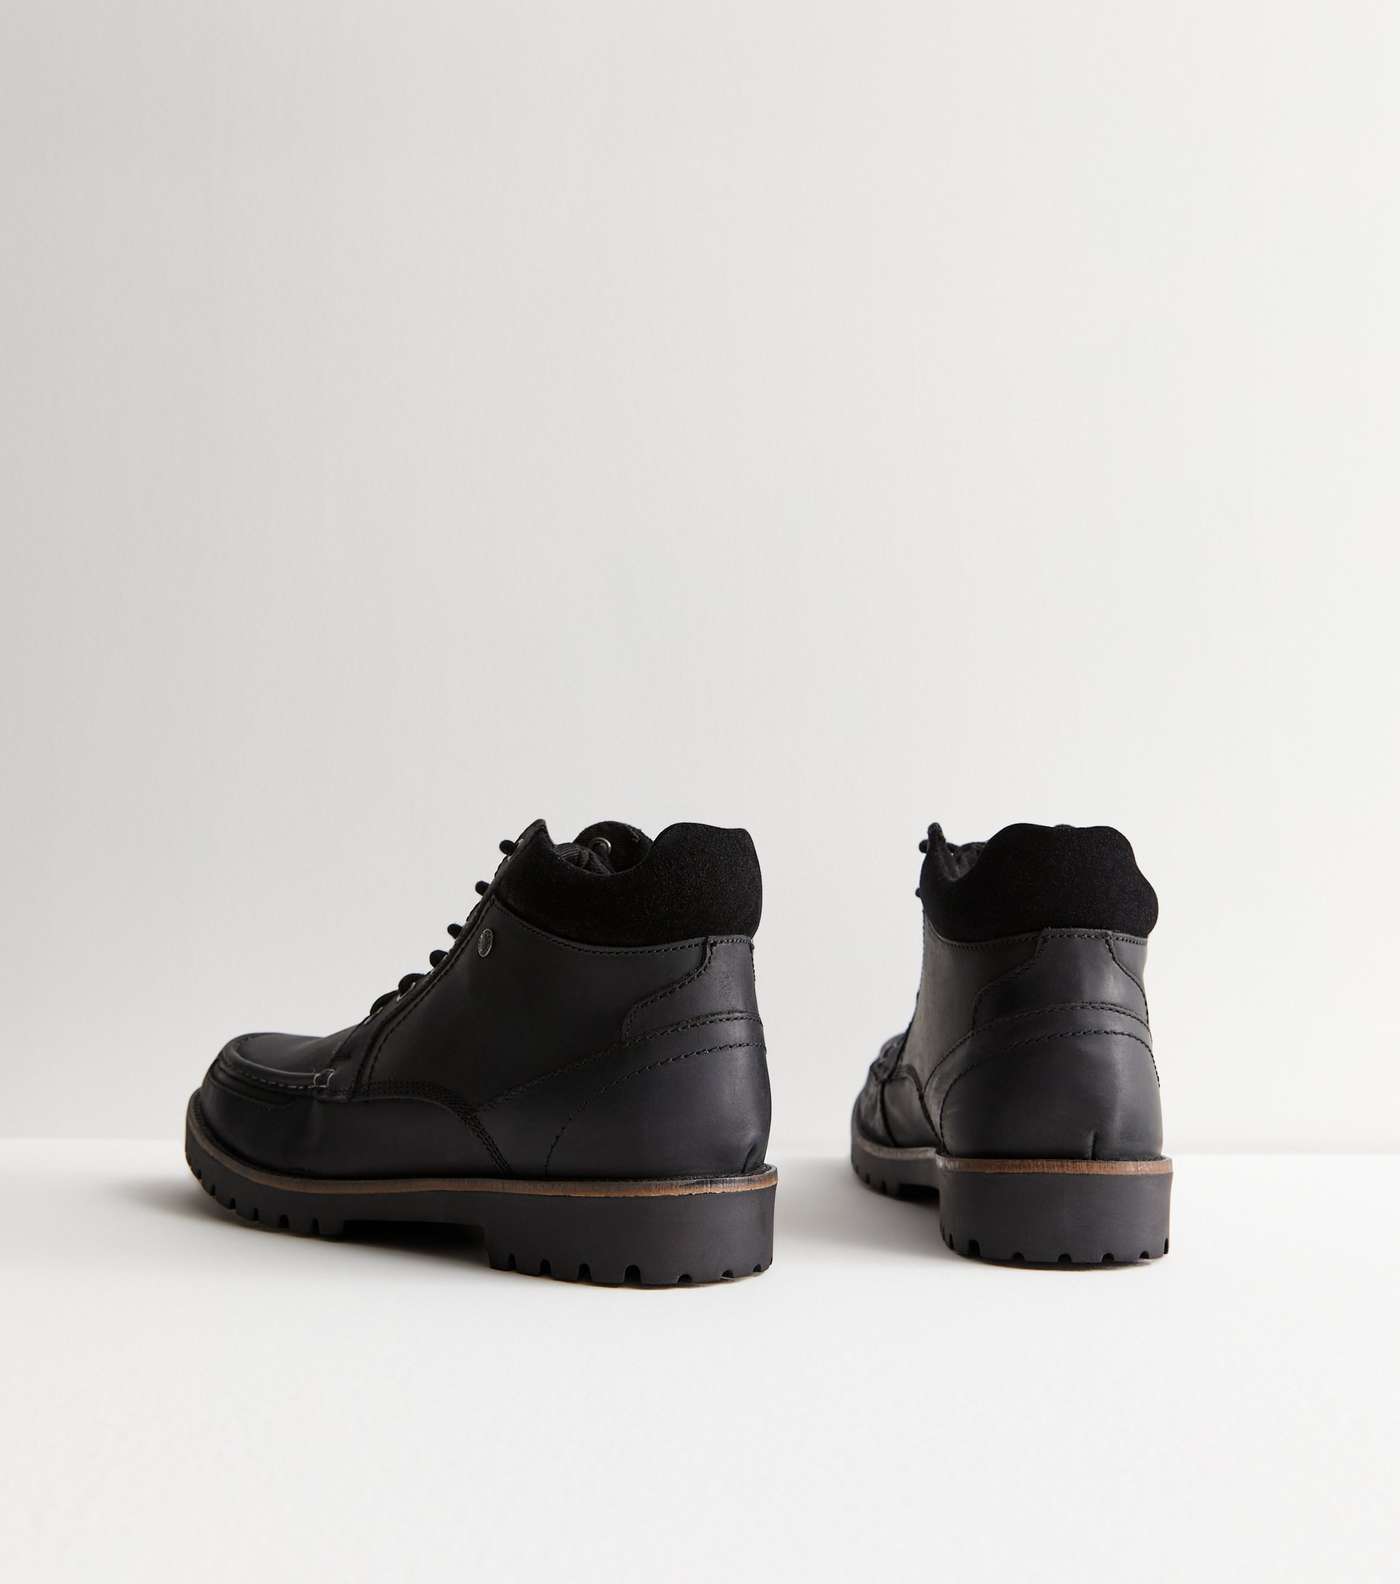 Jack & Jones Black Leather-Look Boots Image 5